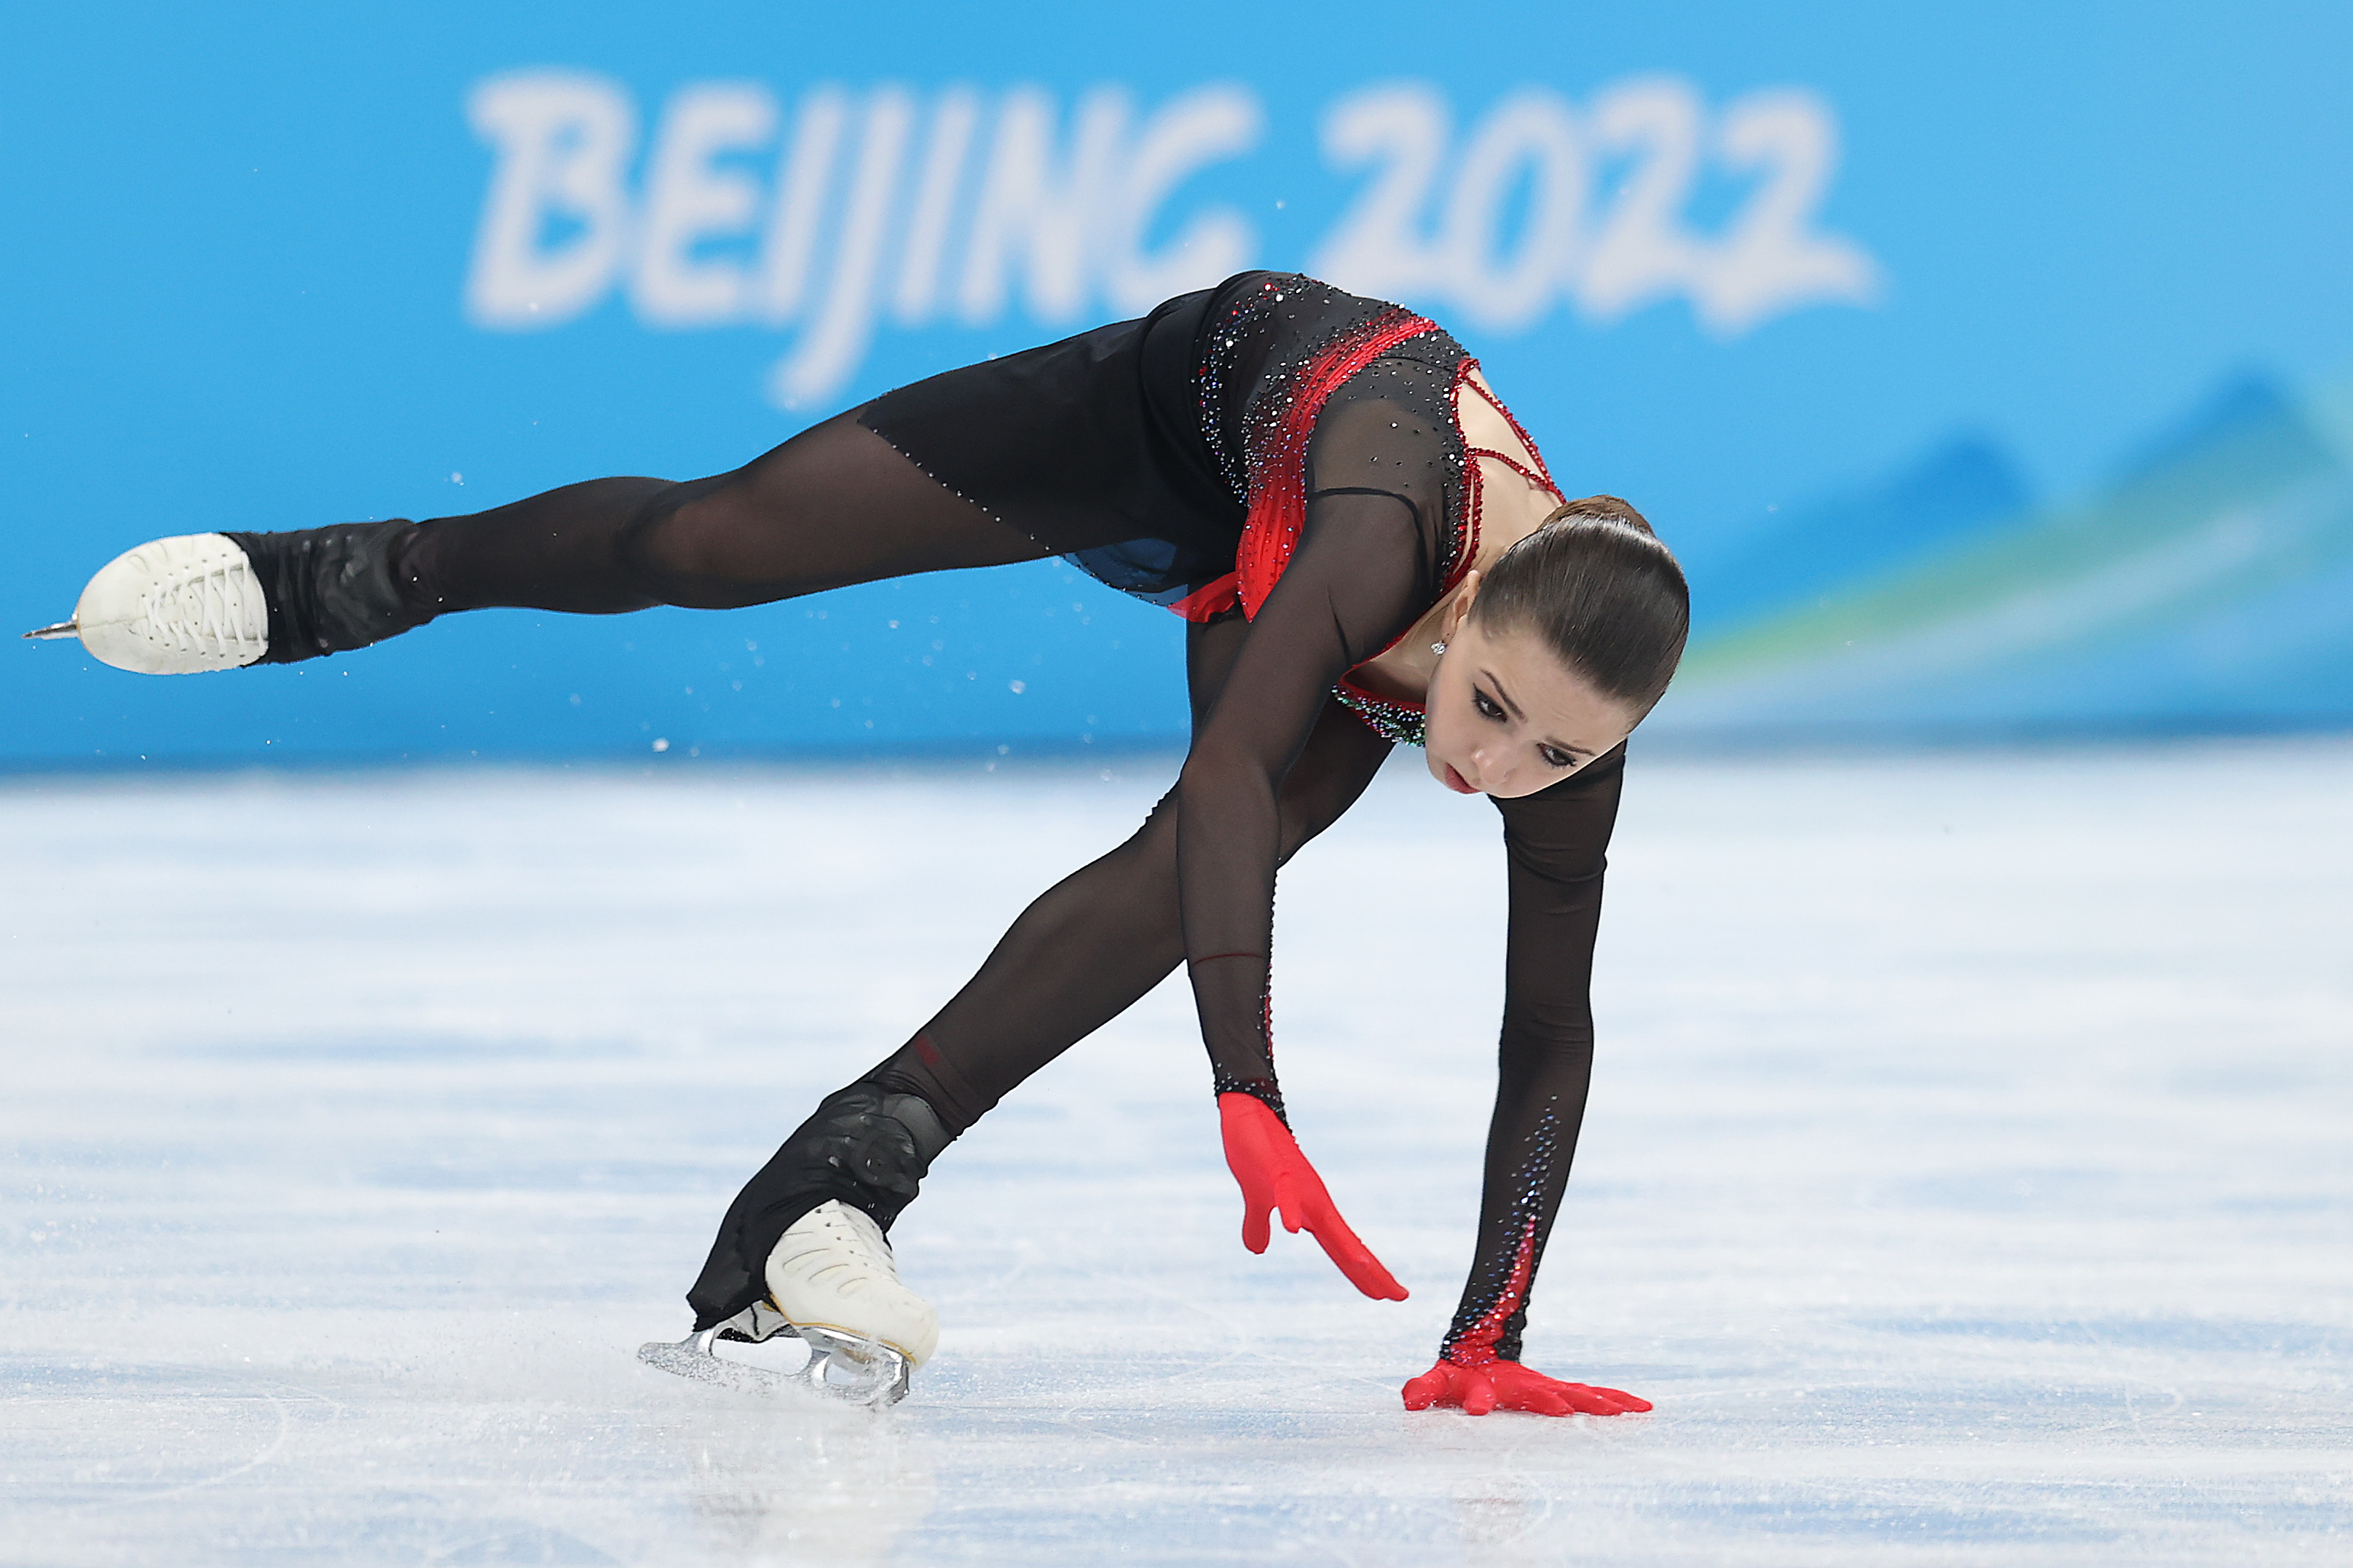 Video Watch Kamila Valievas Wobbly Free Skate Performance at 2022 Beijing Finals